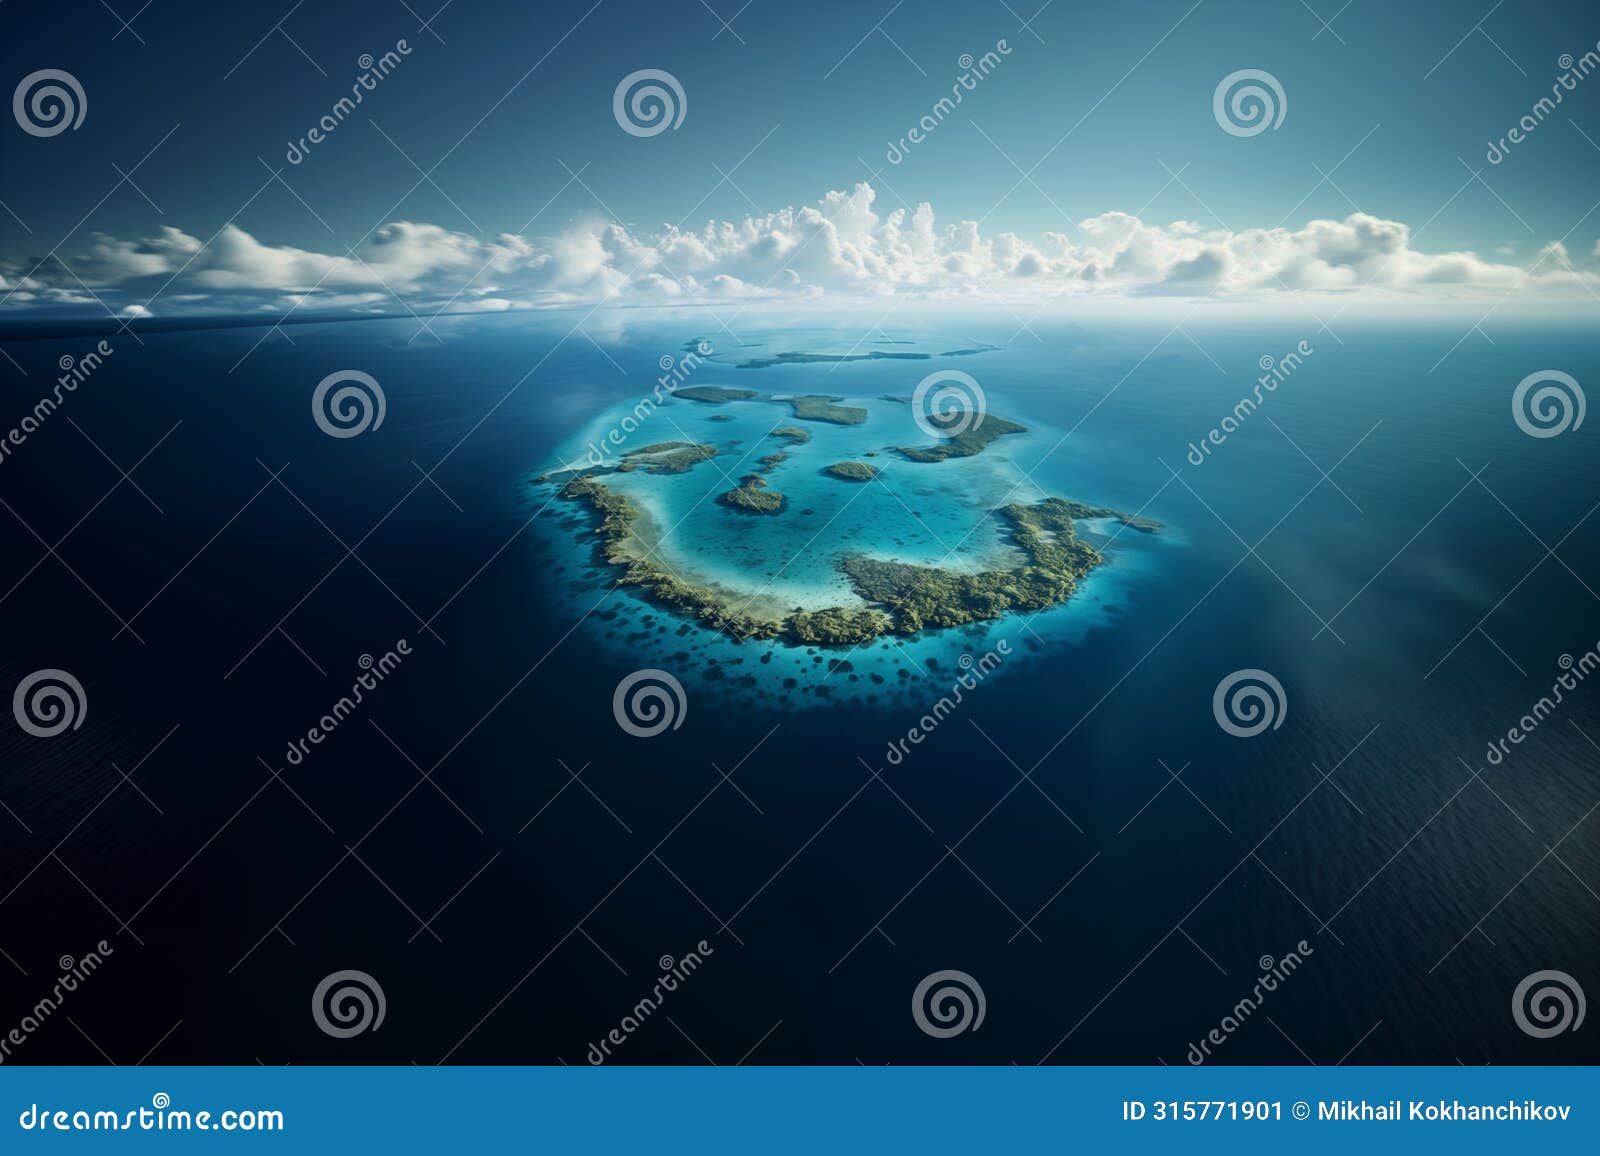 tropical atoll island in ocean